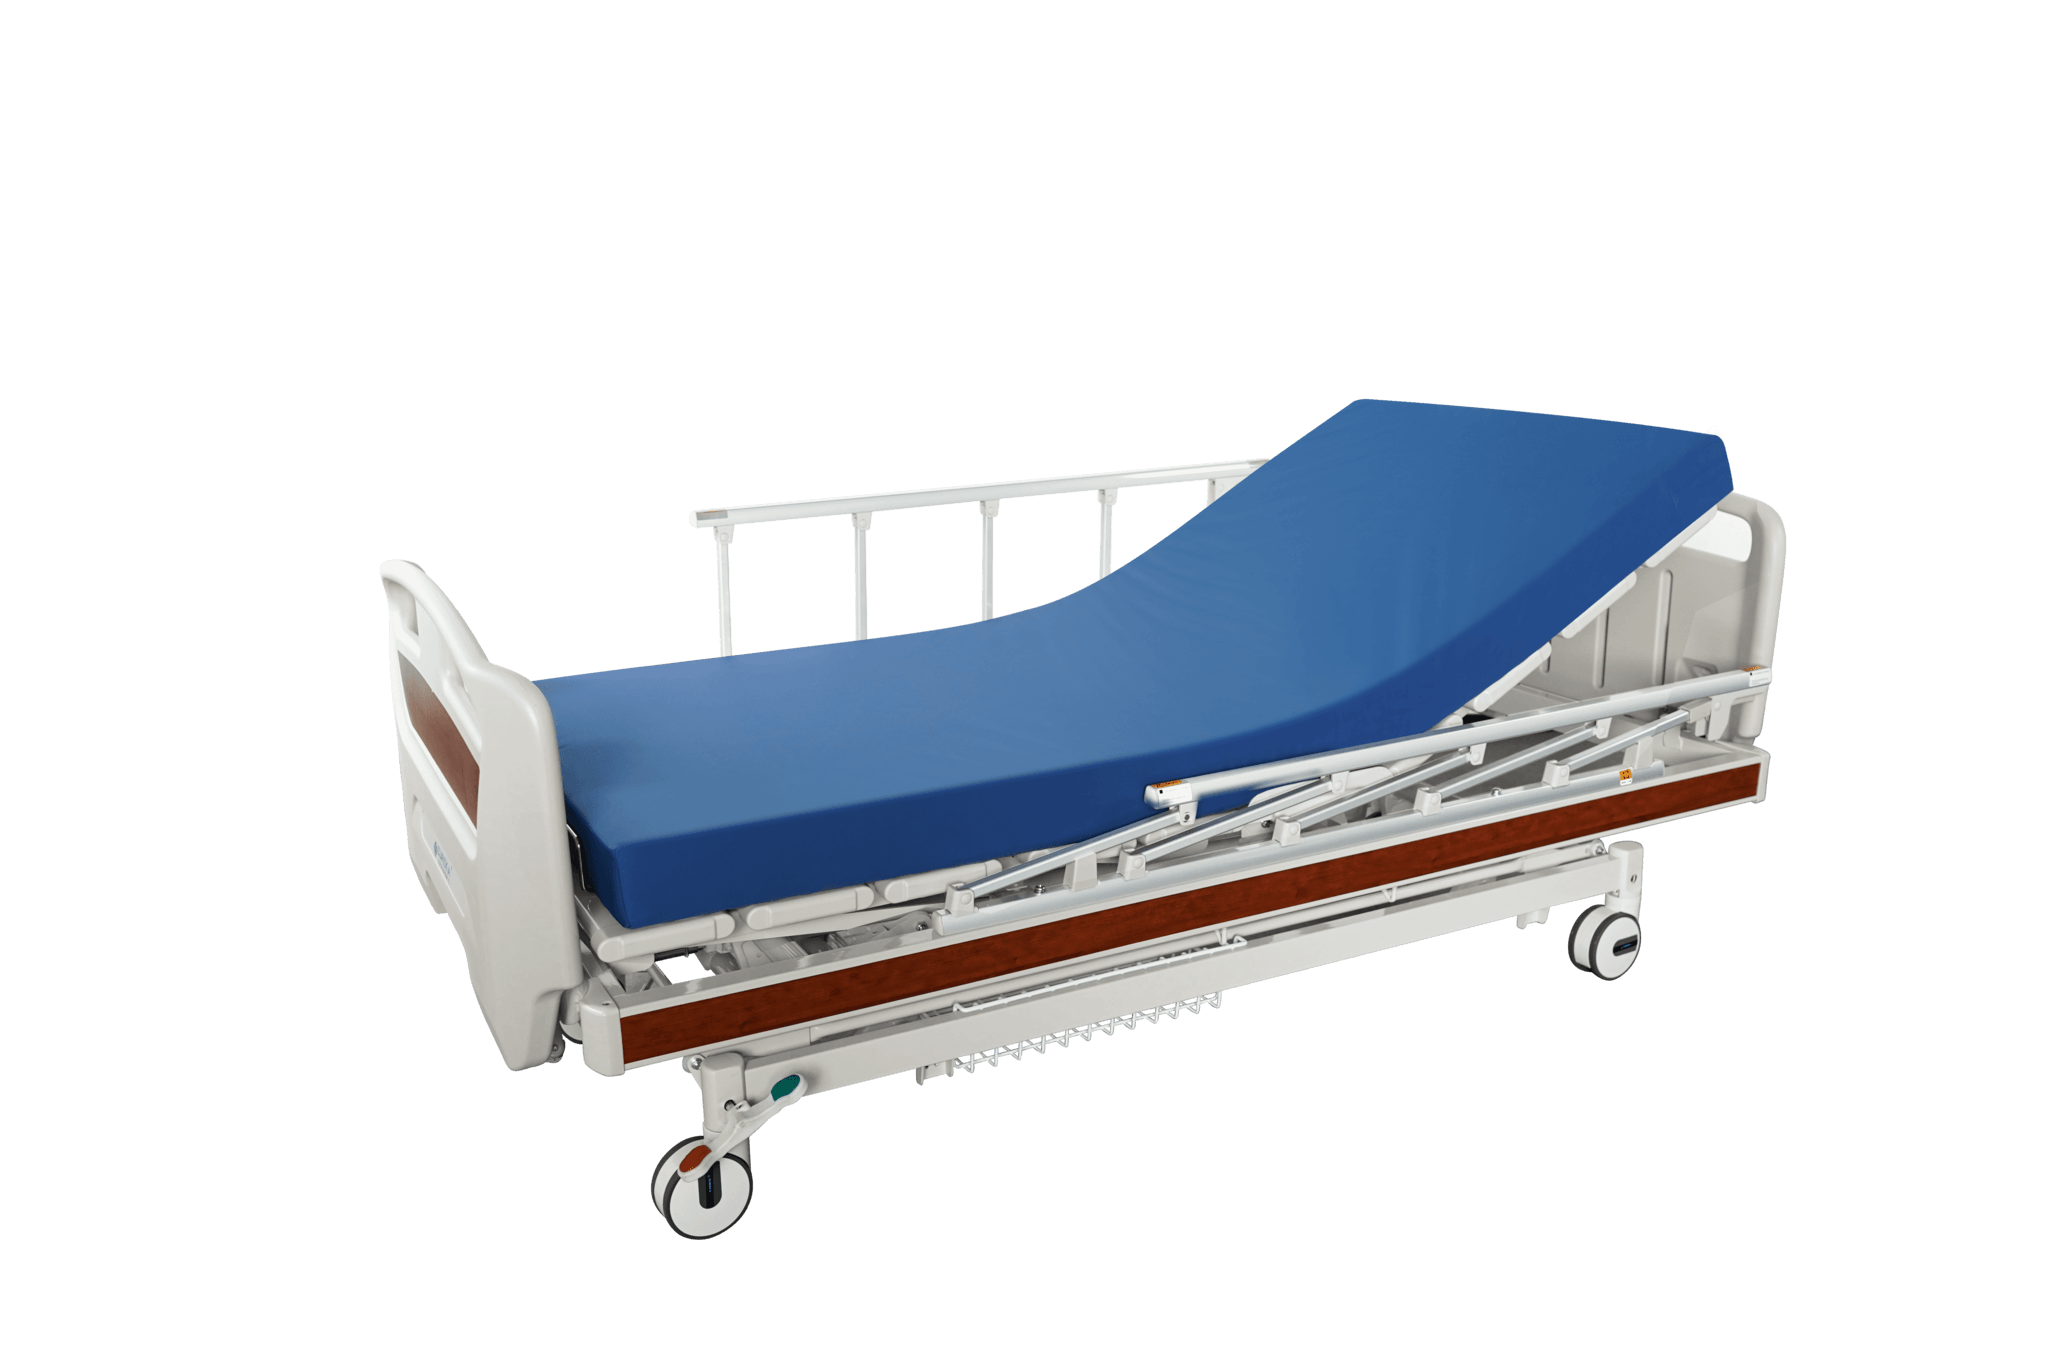 Manual Hospital Bed - Layton Health